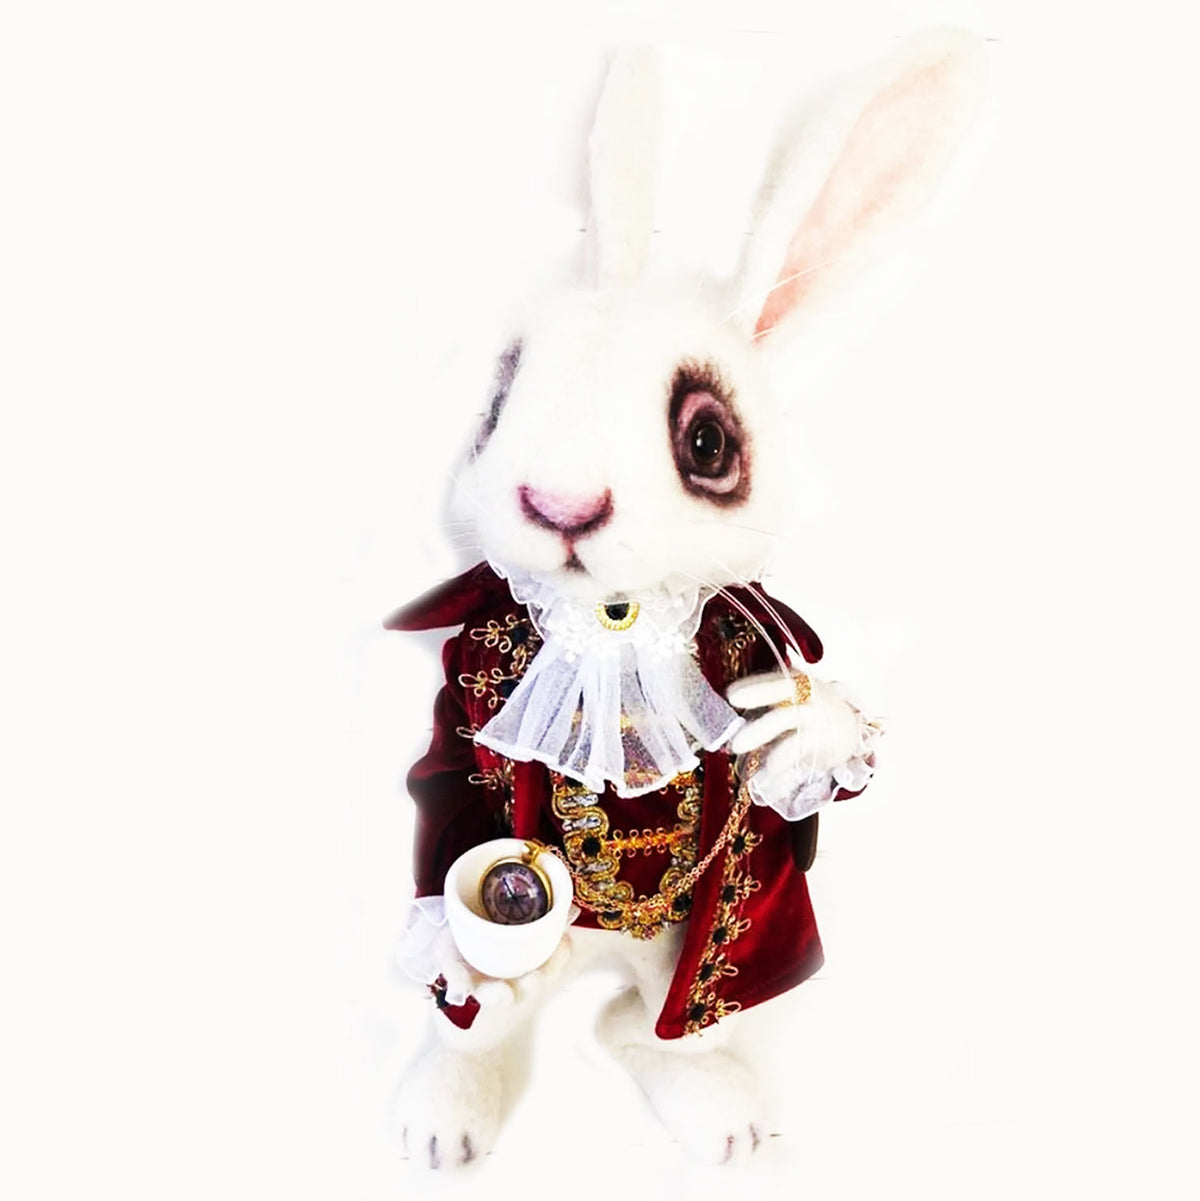 Felt Fairytale Creature Statue - The White Rabbit